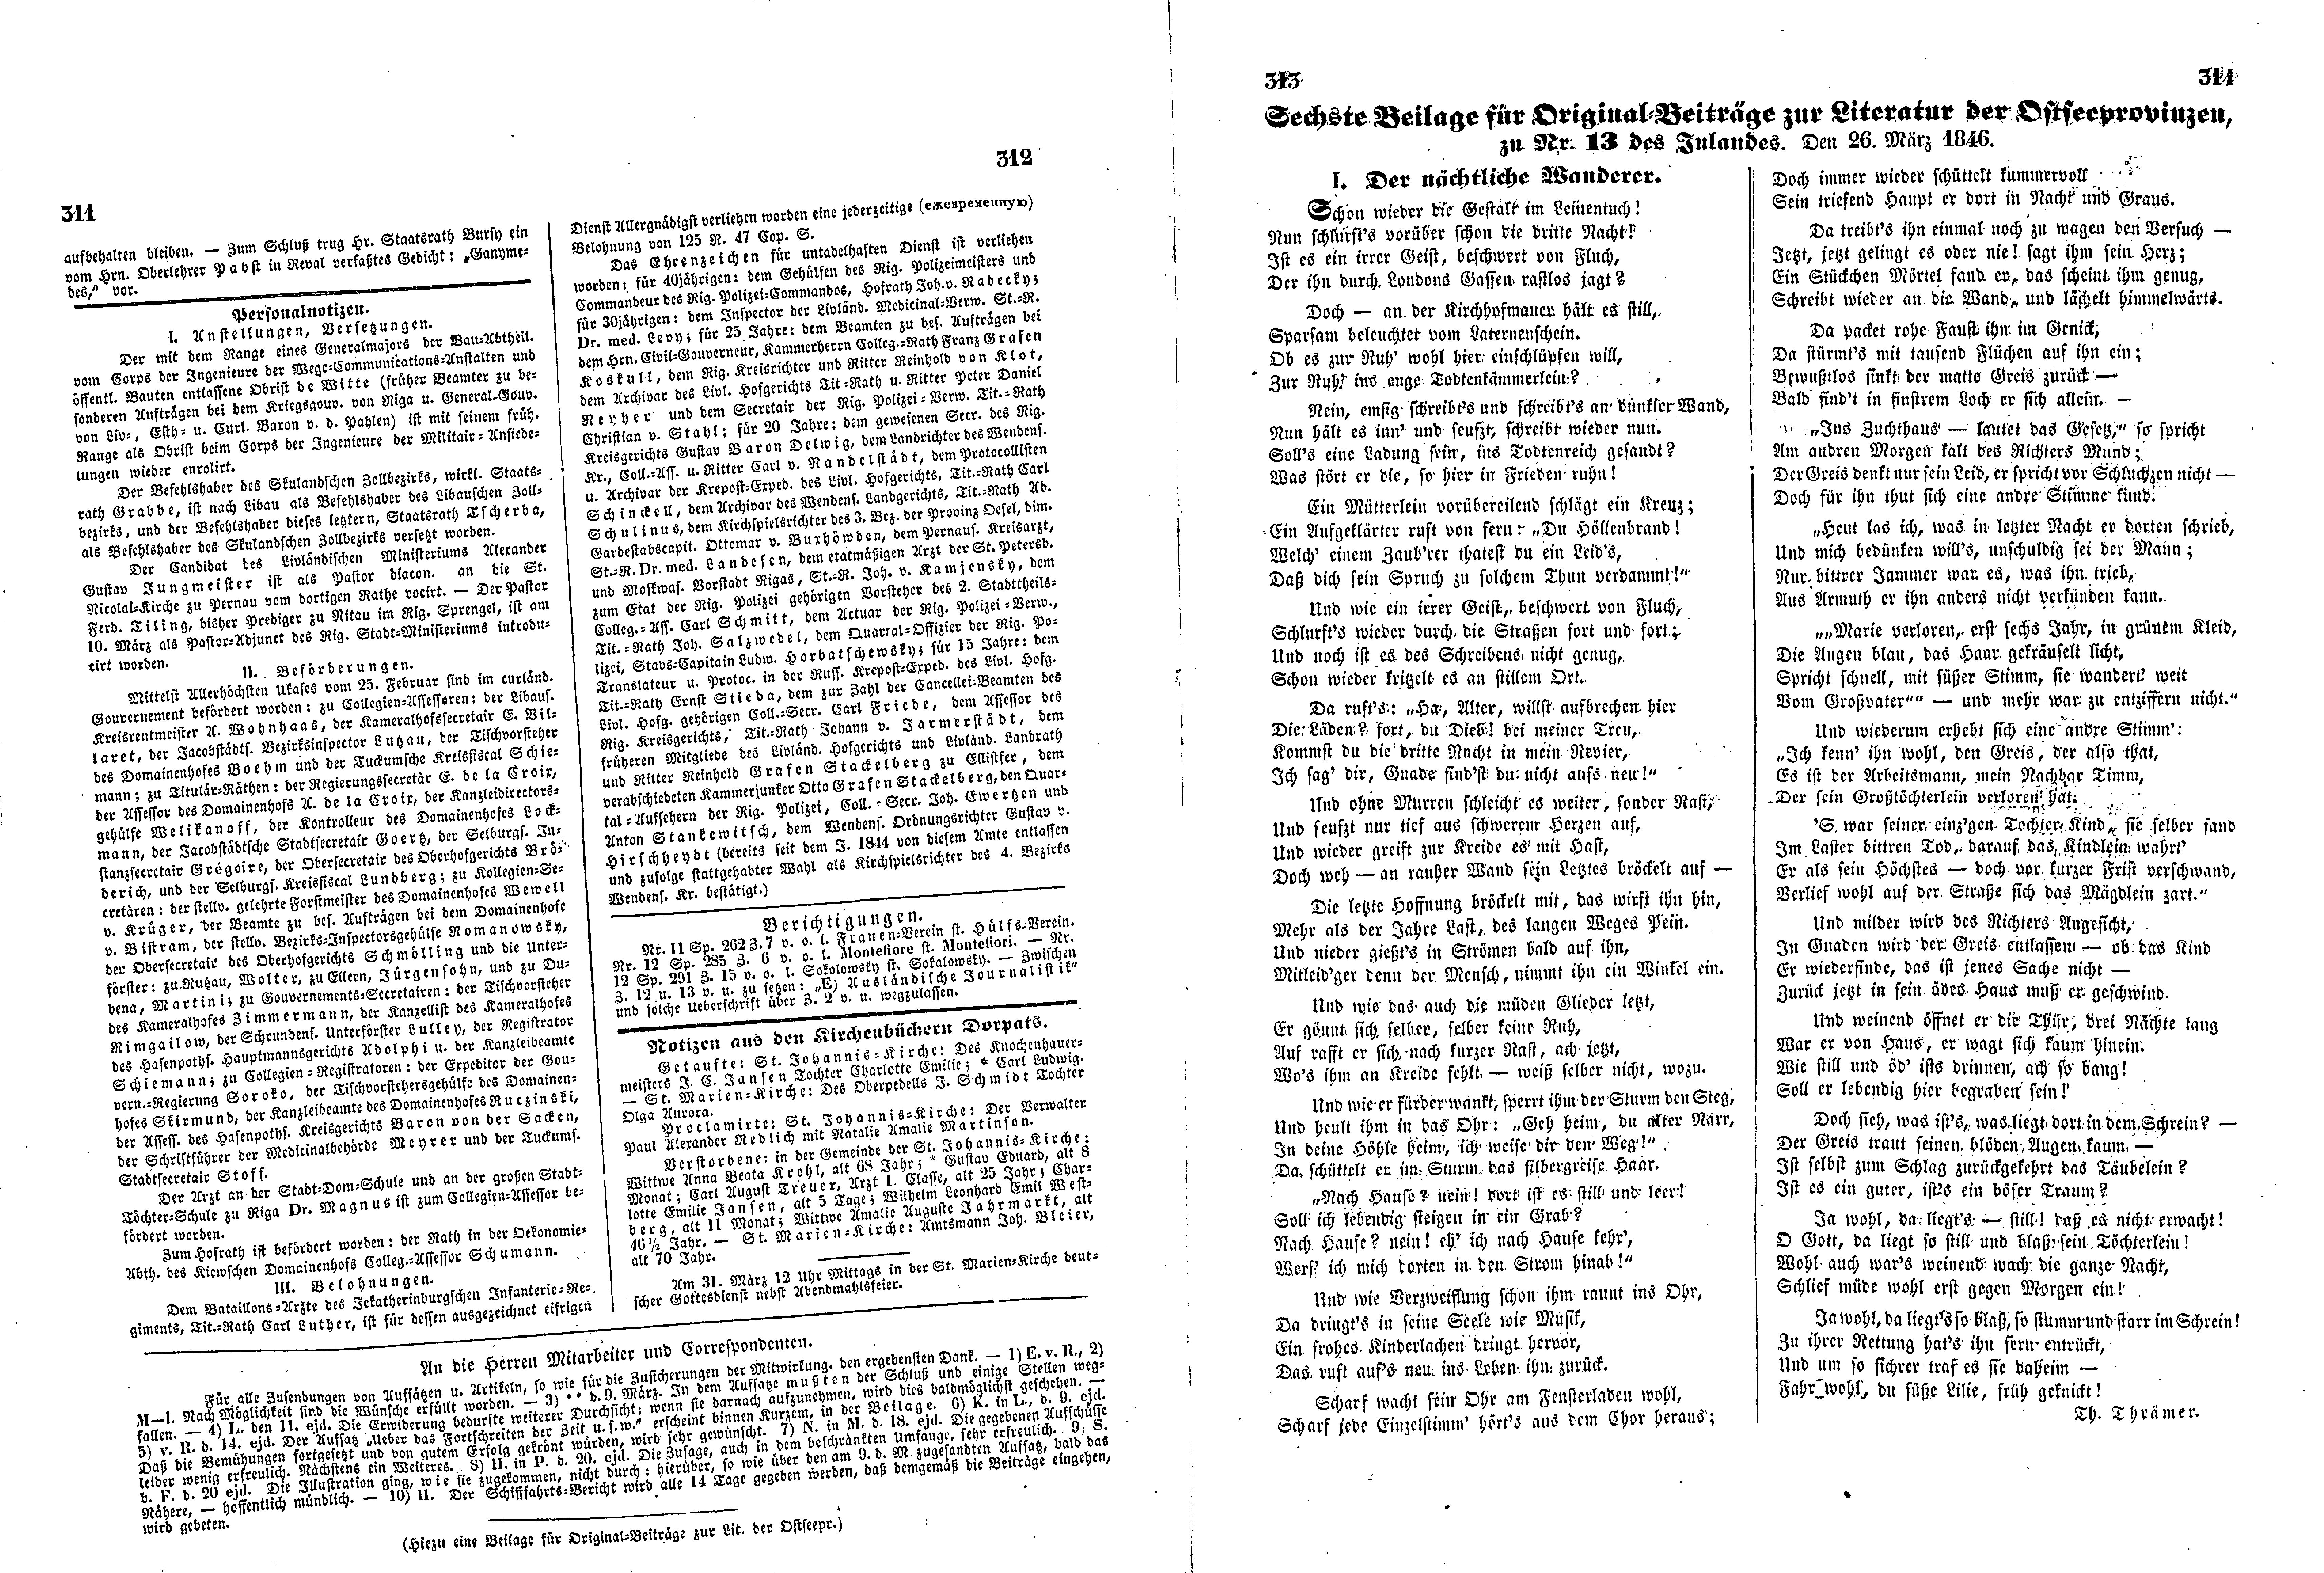 Das Inland [11] (1846) | 83. (311-314) Main body of text